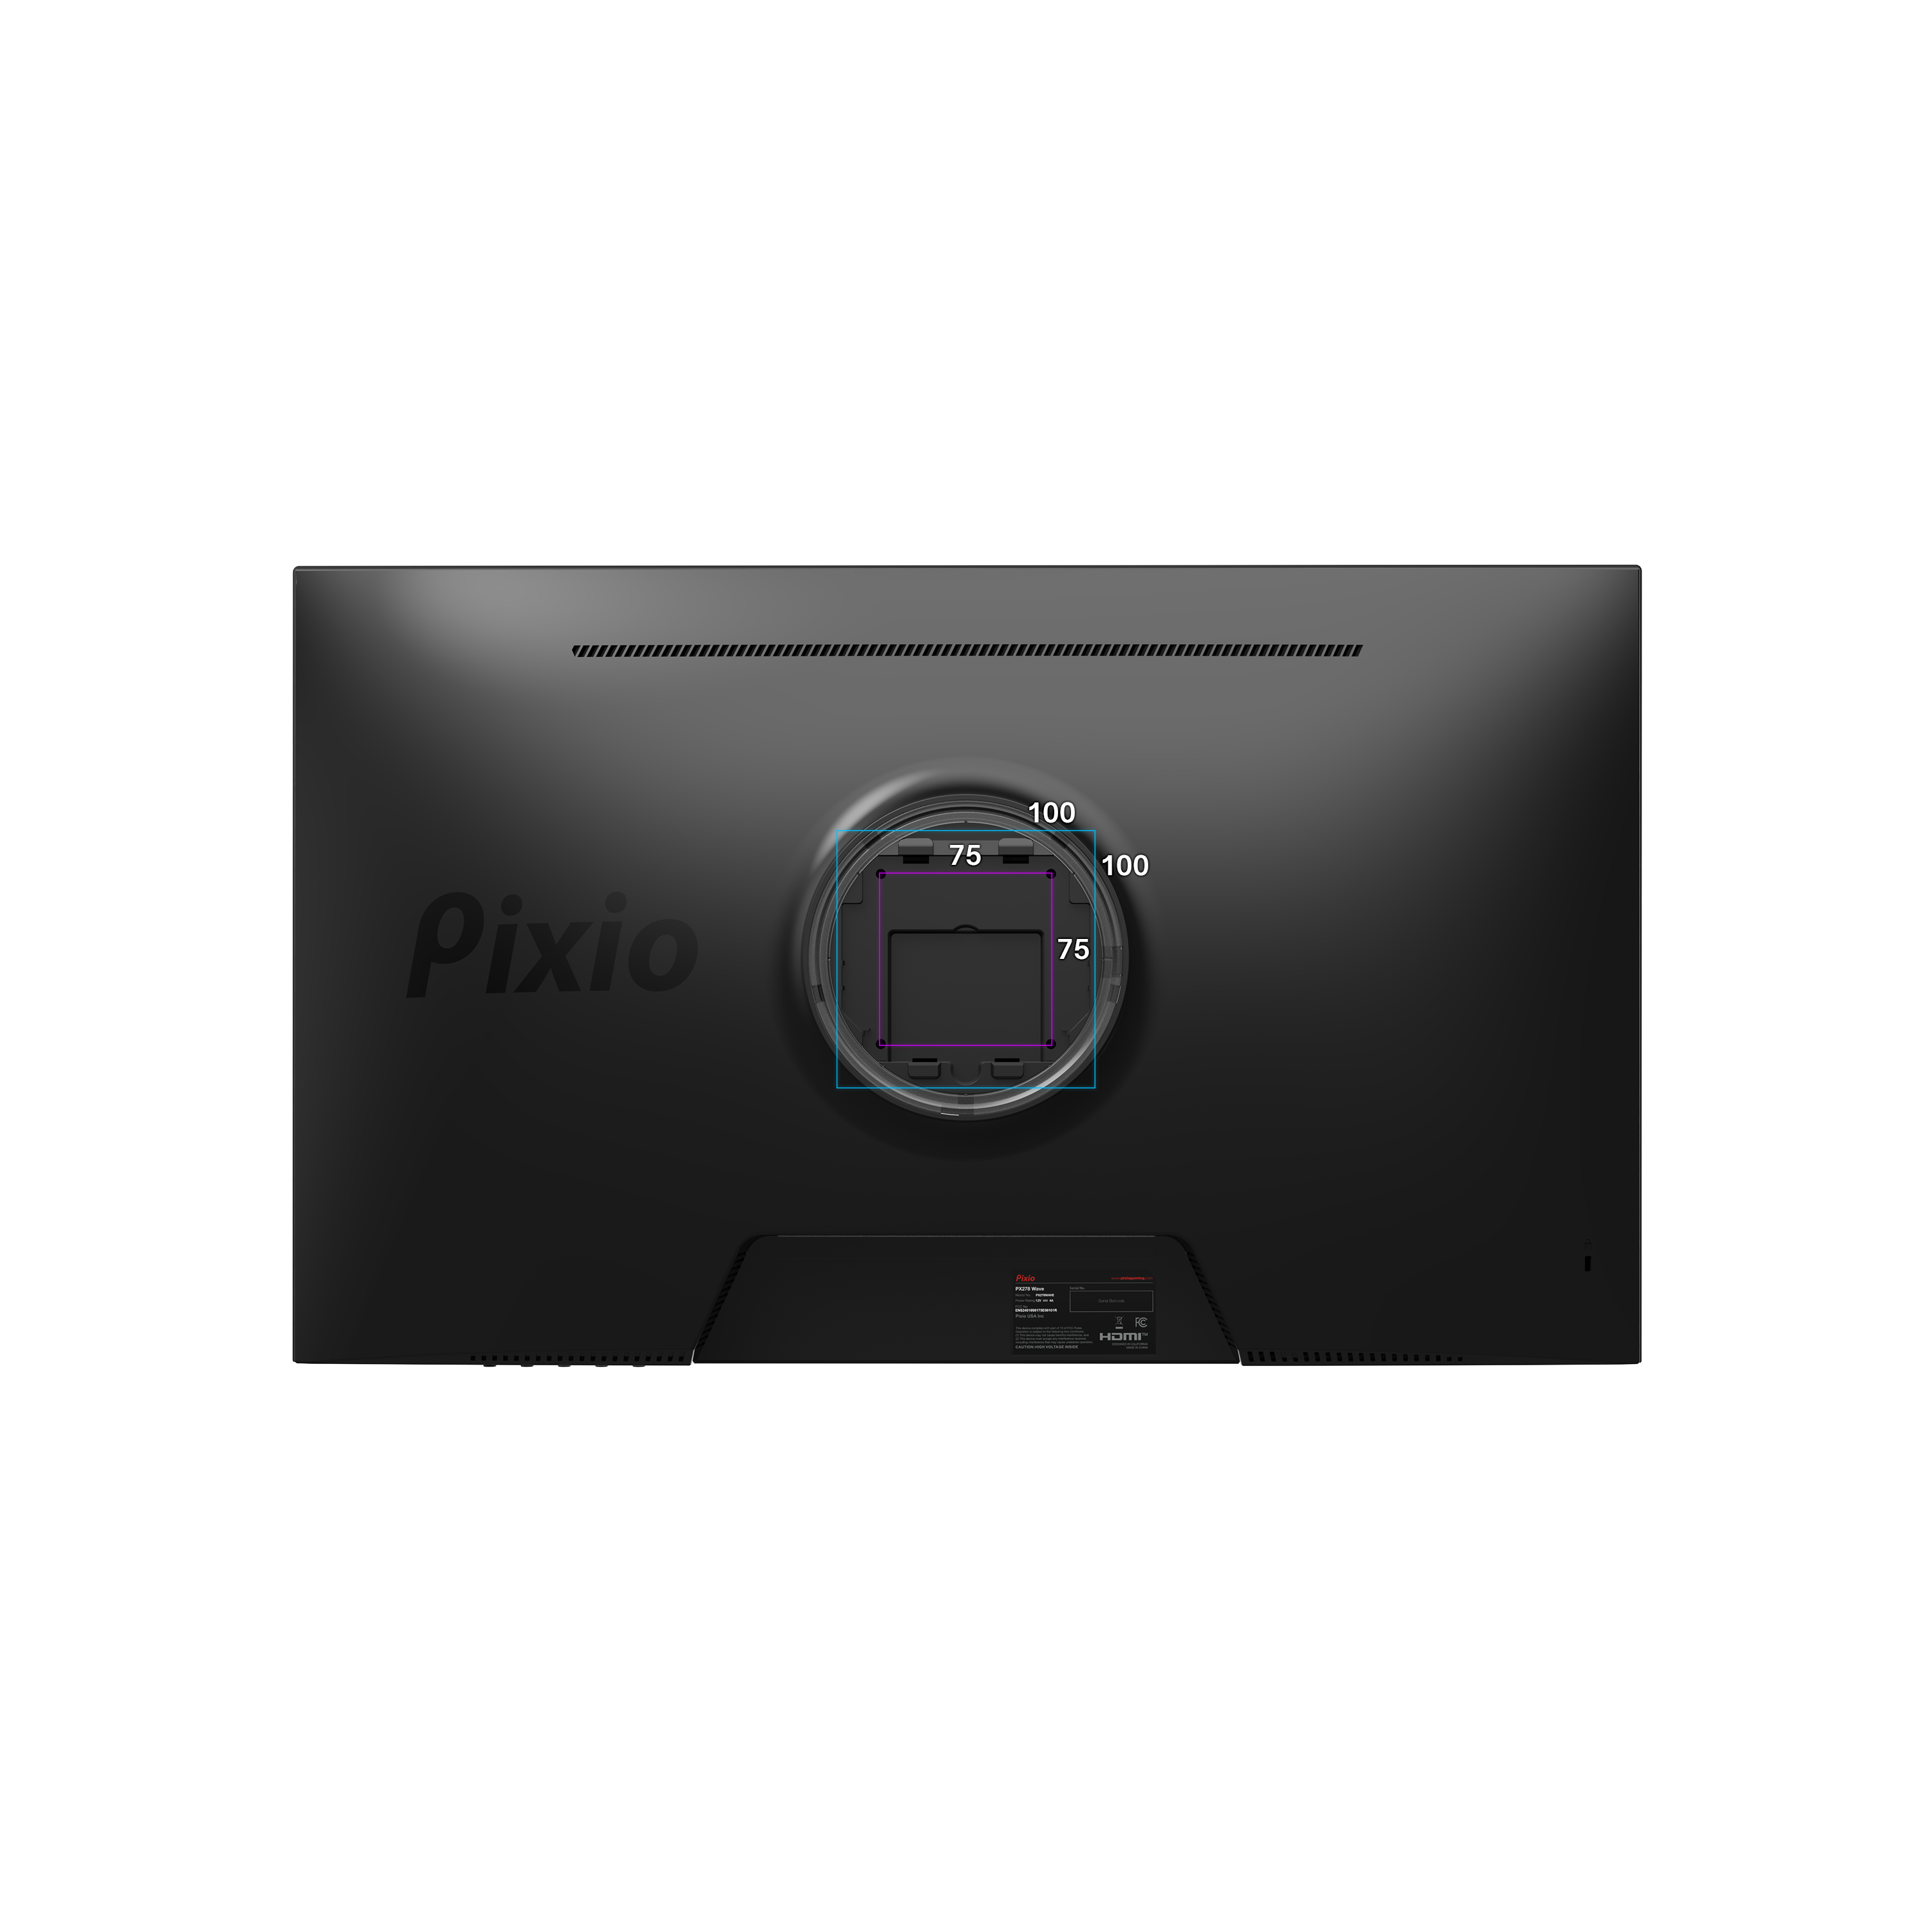 Pixio PX278 Wave Gaming Monitor - Certified Refurbished